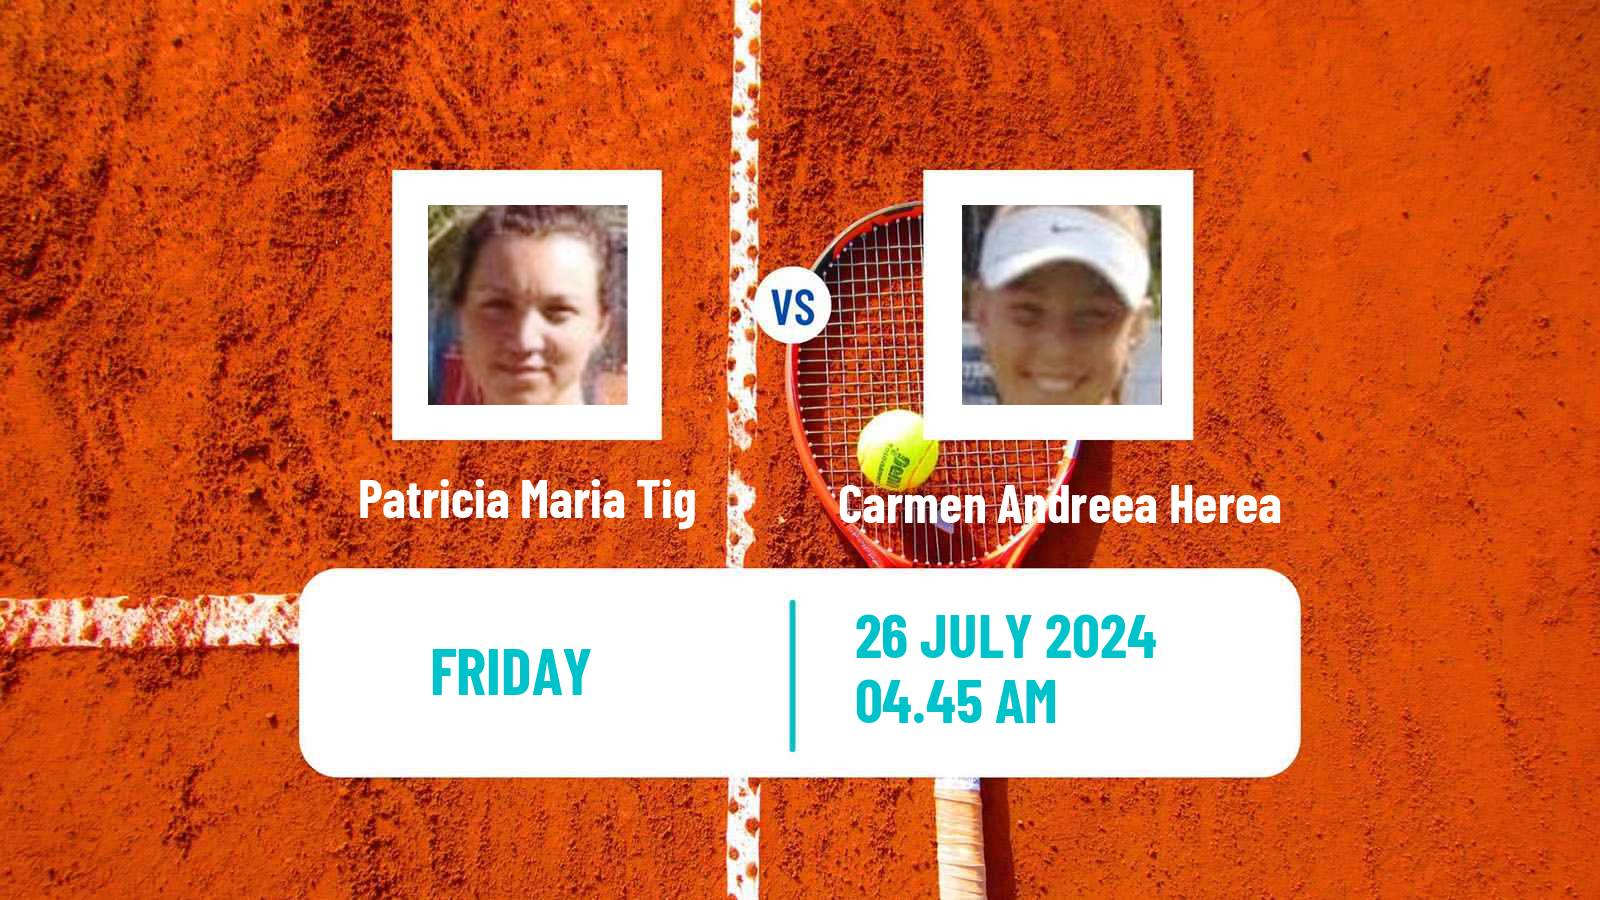 Tennis ITF W15 Satu Mare Women Patricia Maria Tig - Carmen Andreea Herea